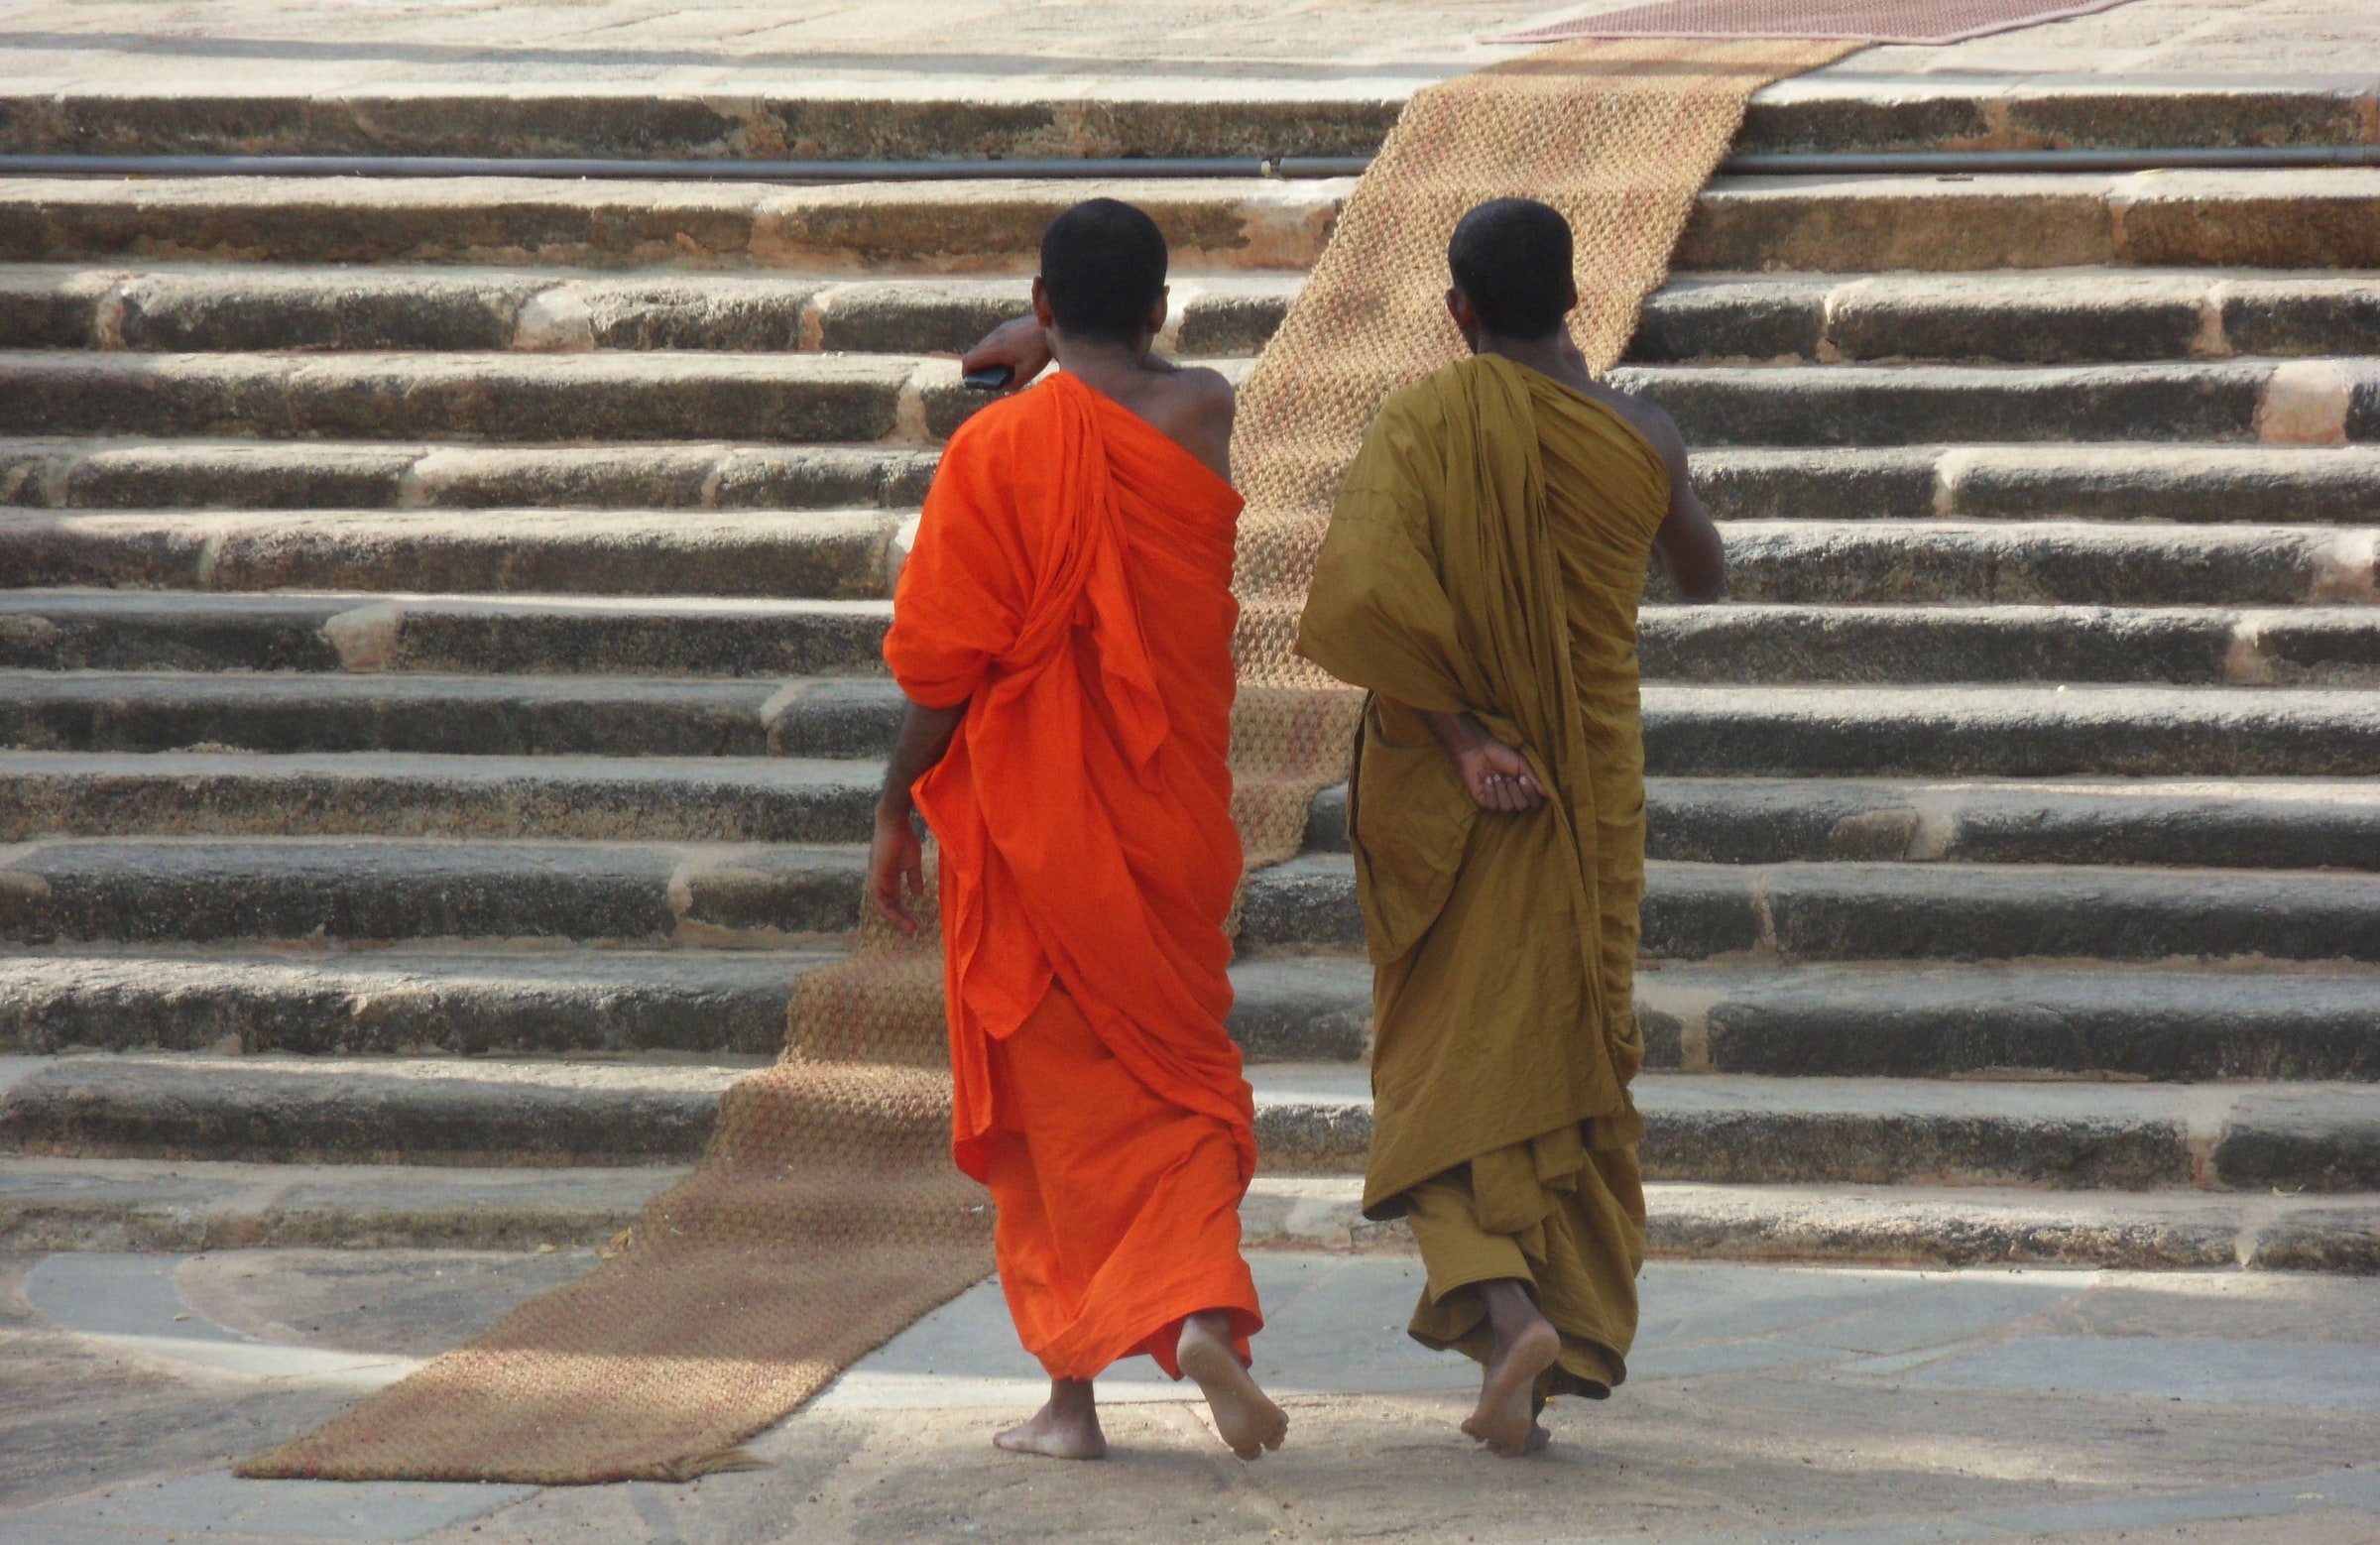 Buddhism in Sri Lanka